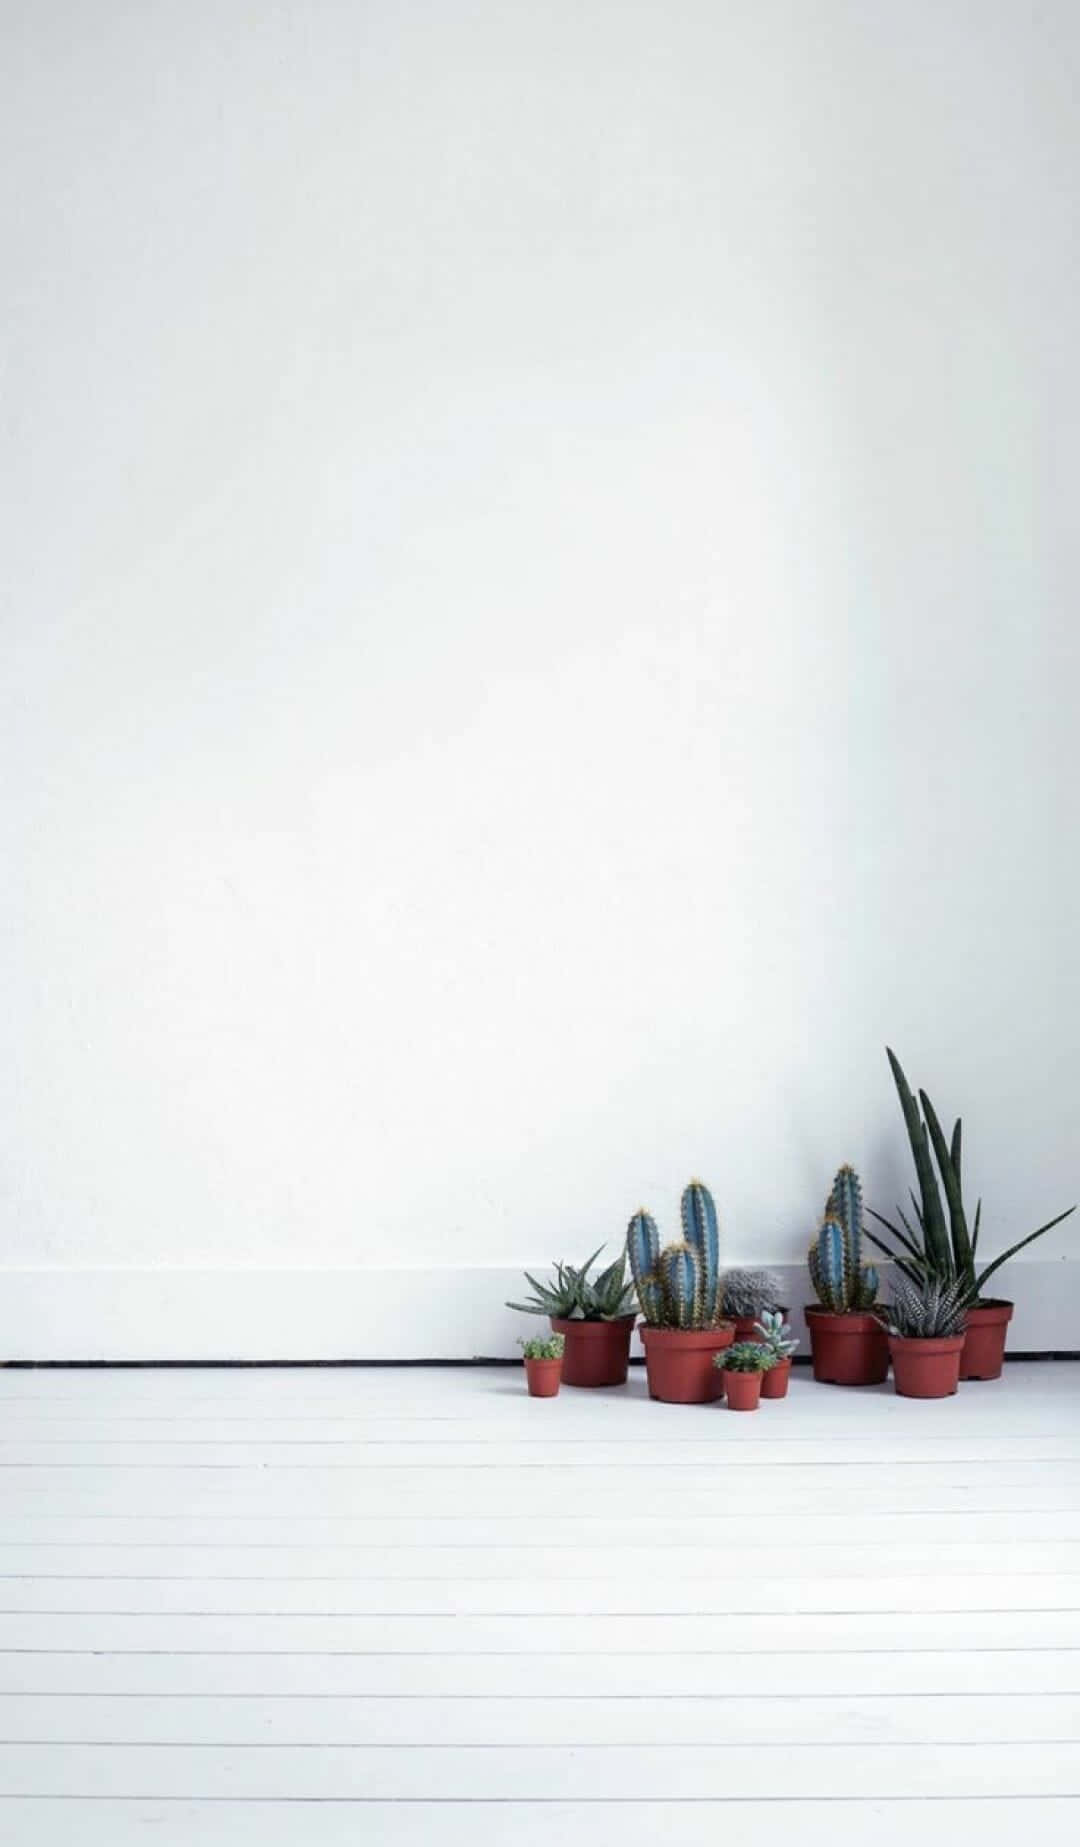 Cactus Plants On A White Floor Wallpaper